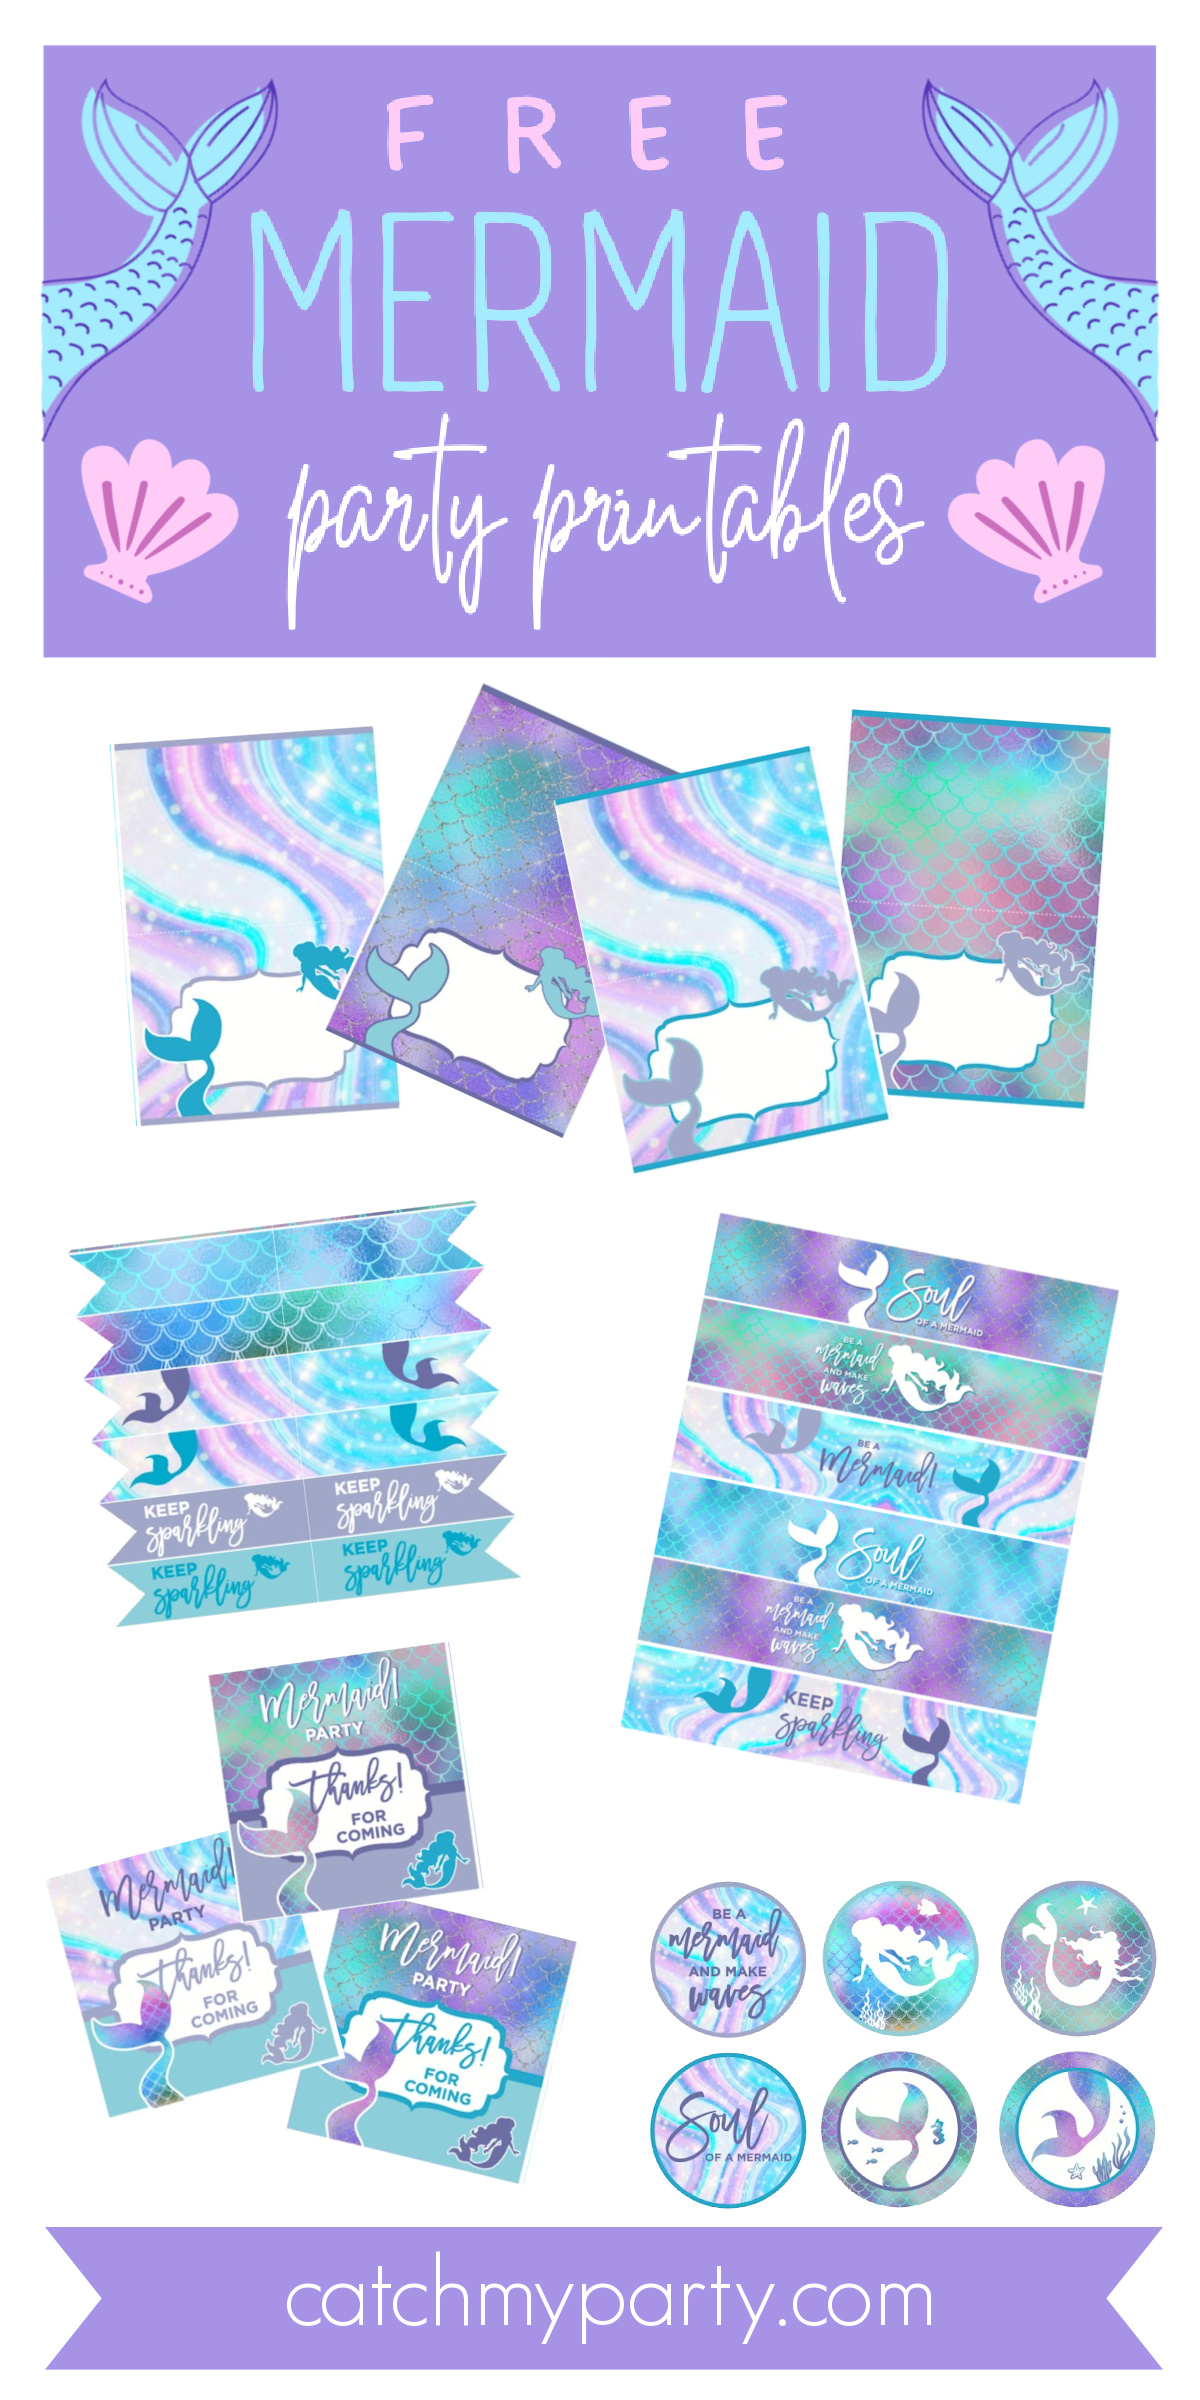 Fabulous FREE Mermaid Party Printables!